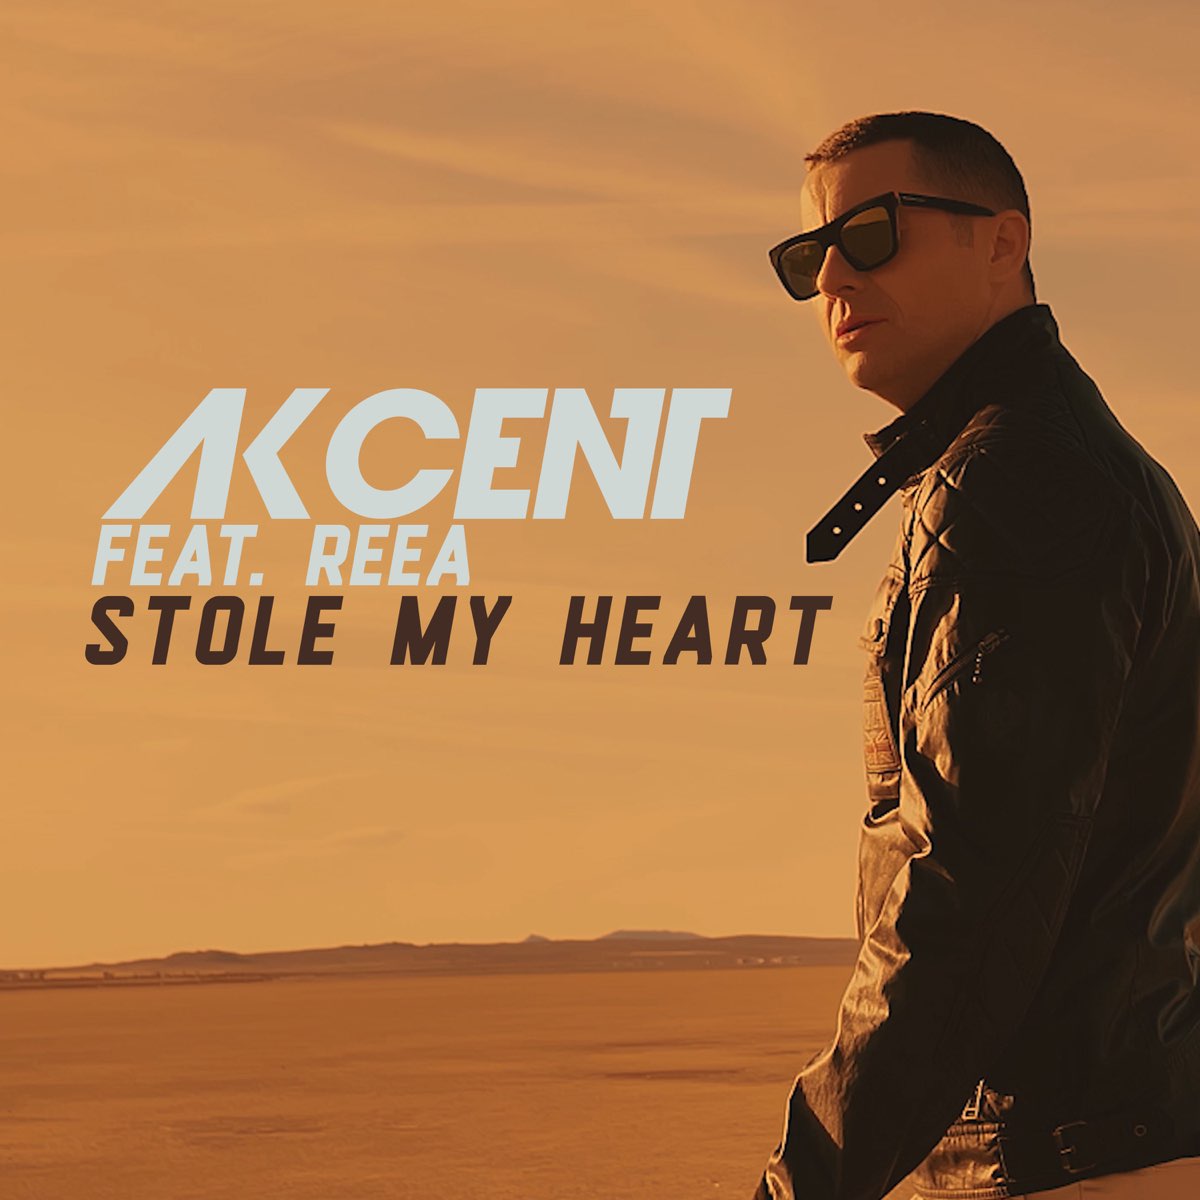 Stole My Heart (feat. Reea) - Single - Album by Akcent - Apple Music